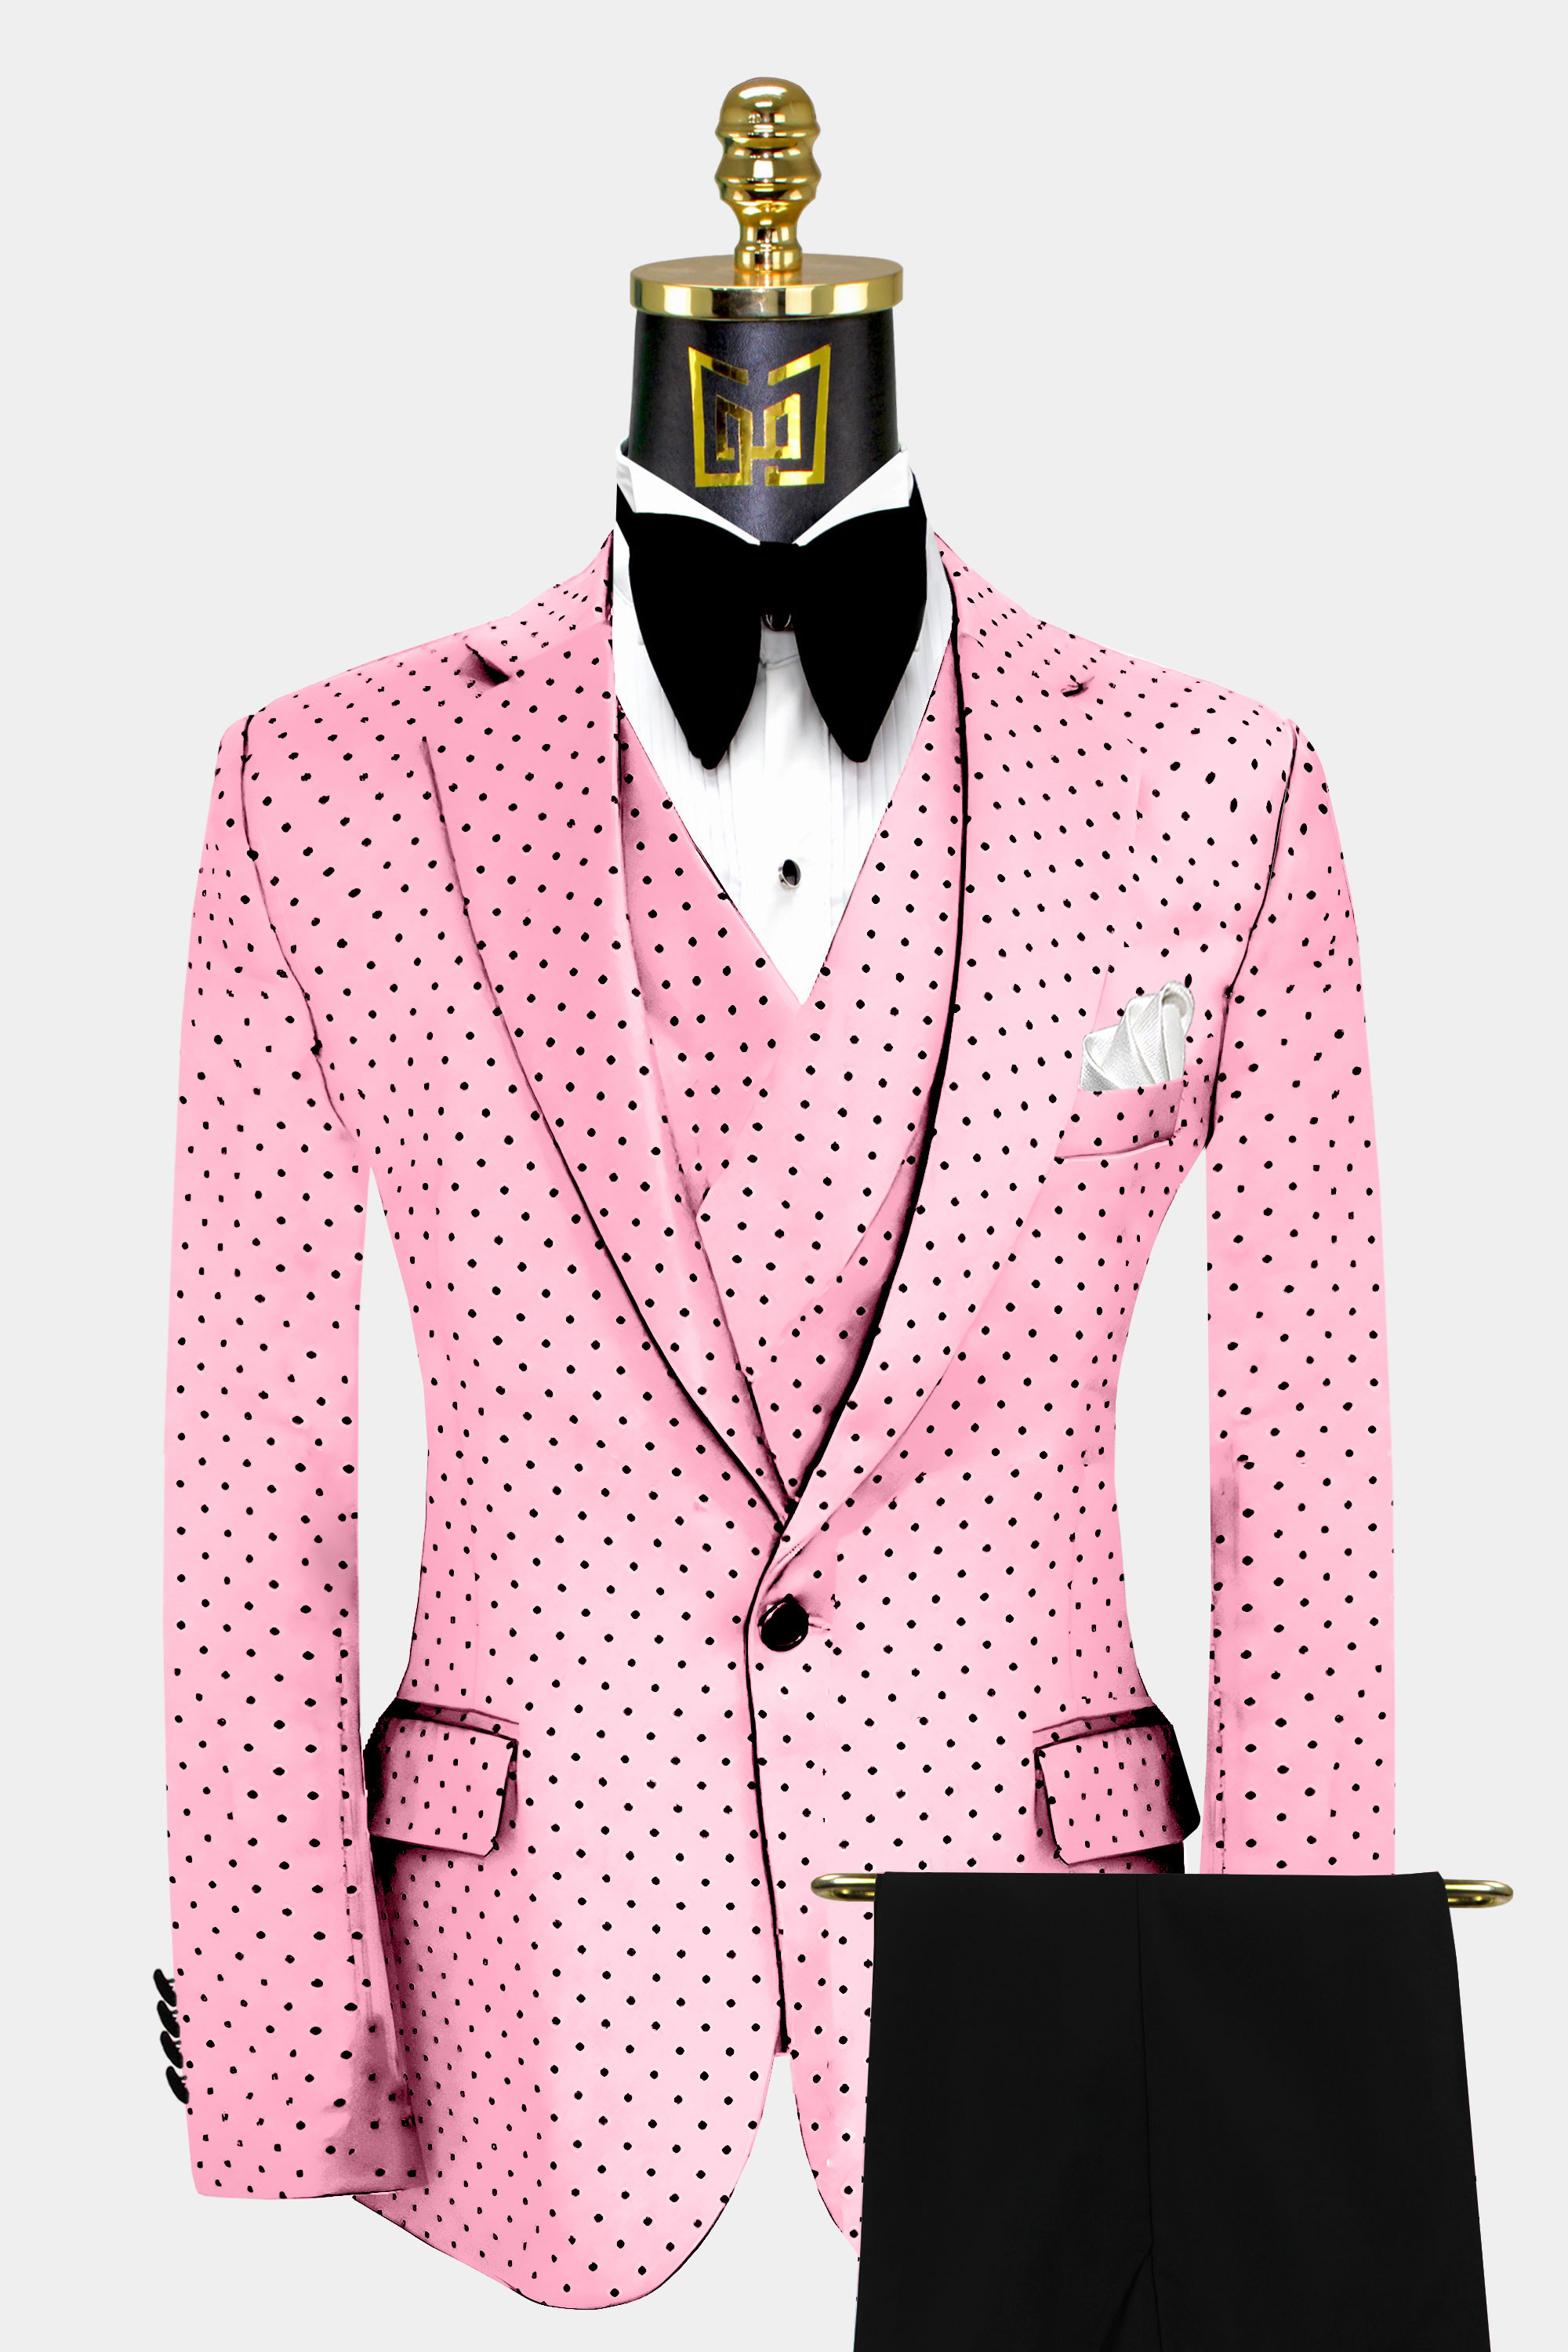 Blush Pink Tuxedo Suit